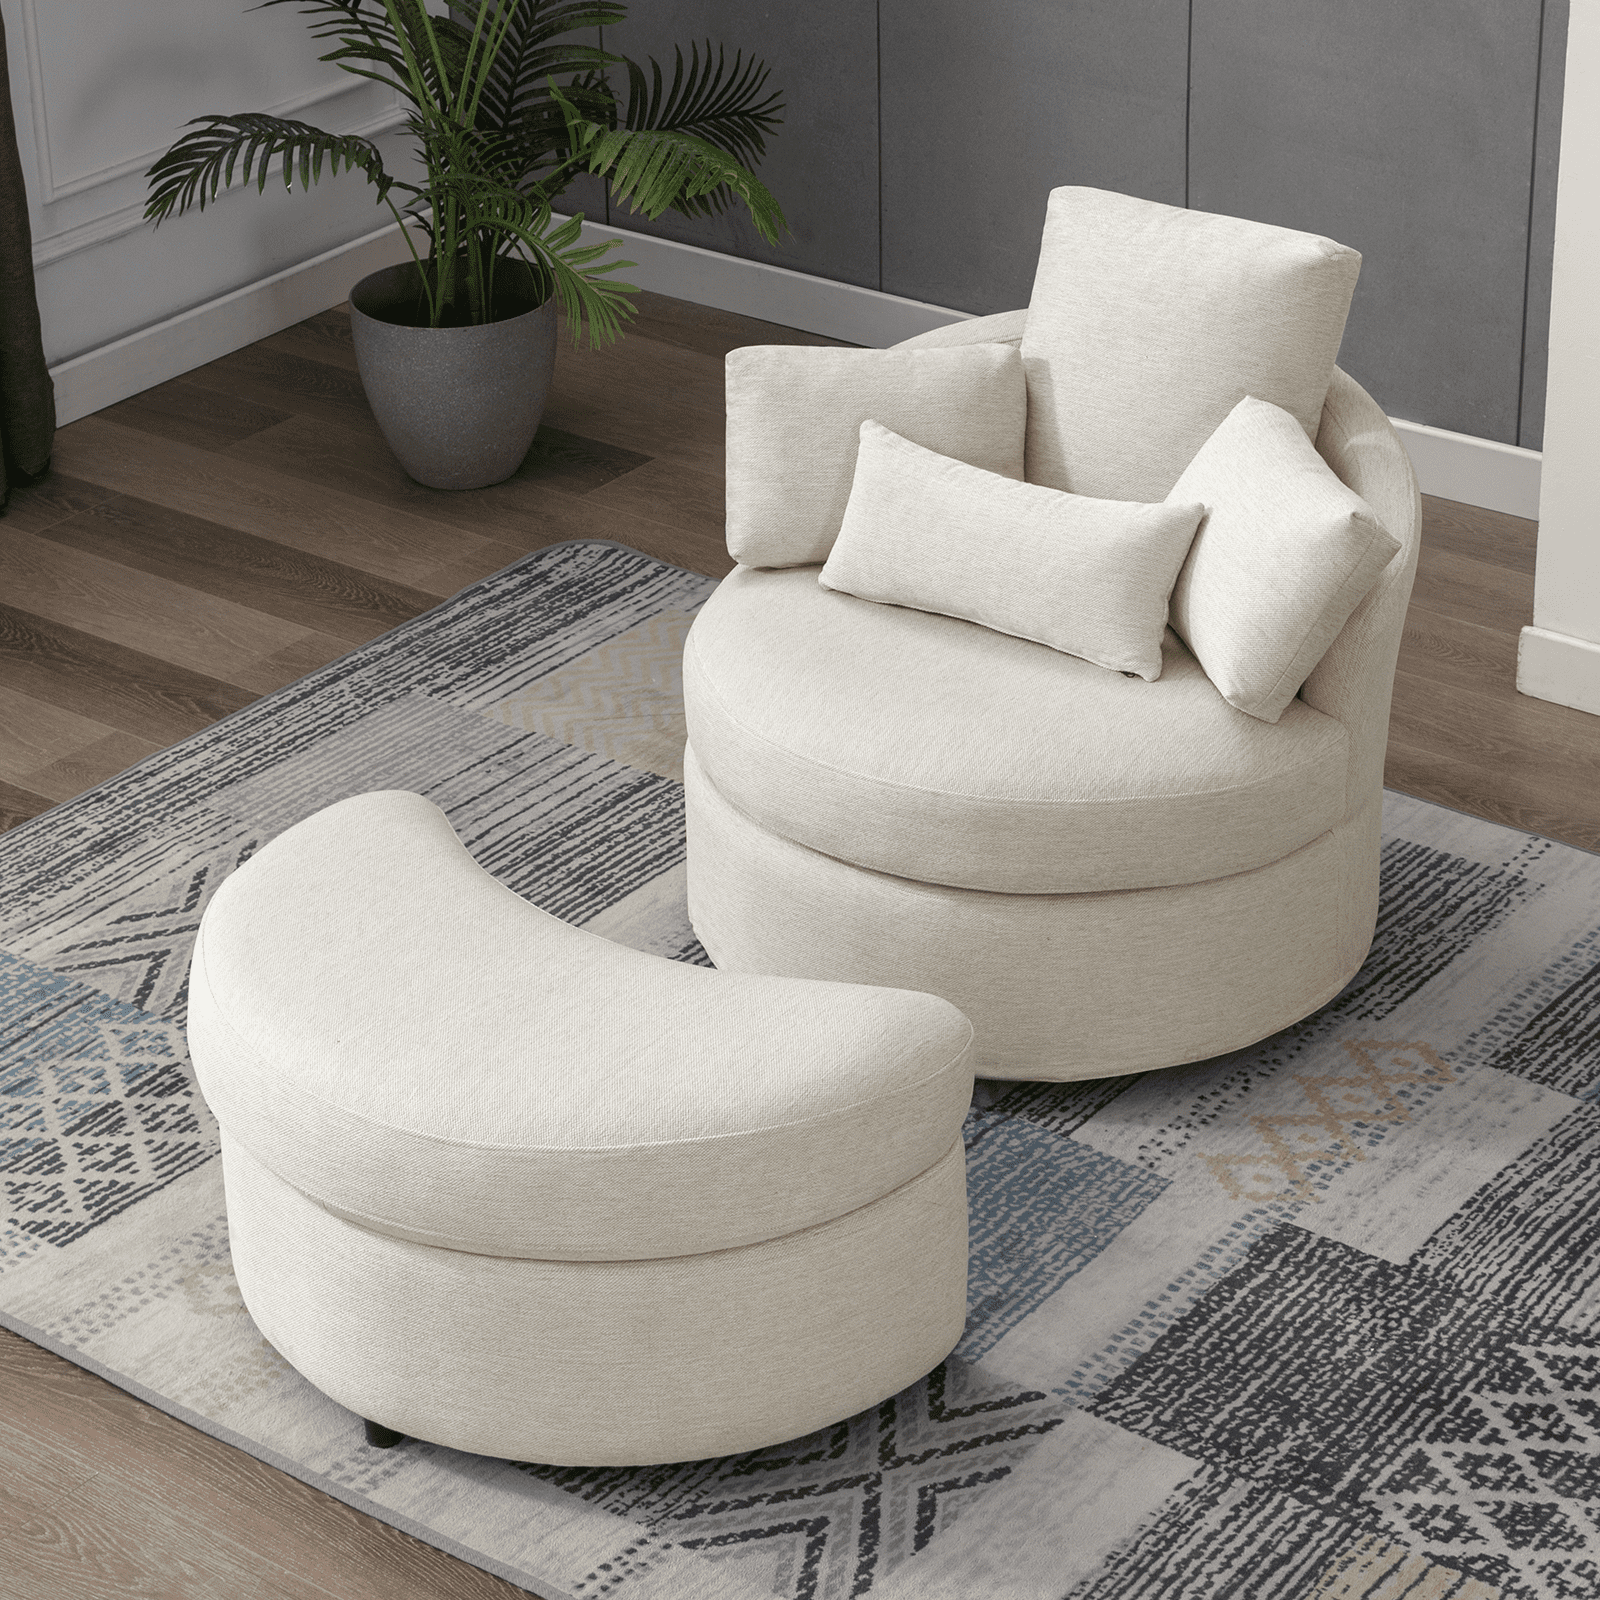 OMO Modern Memory Foam Lounge Chair with Ottoman